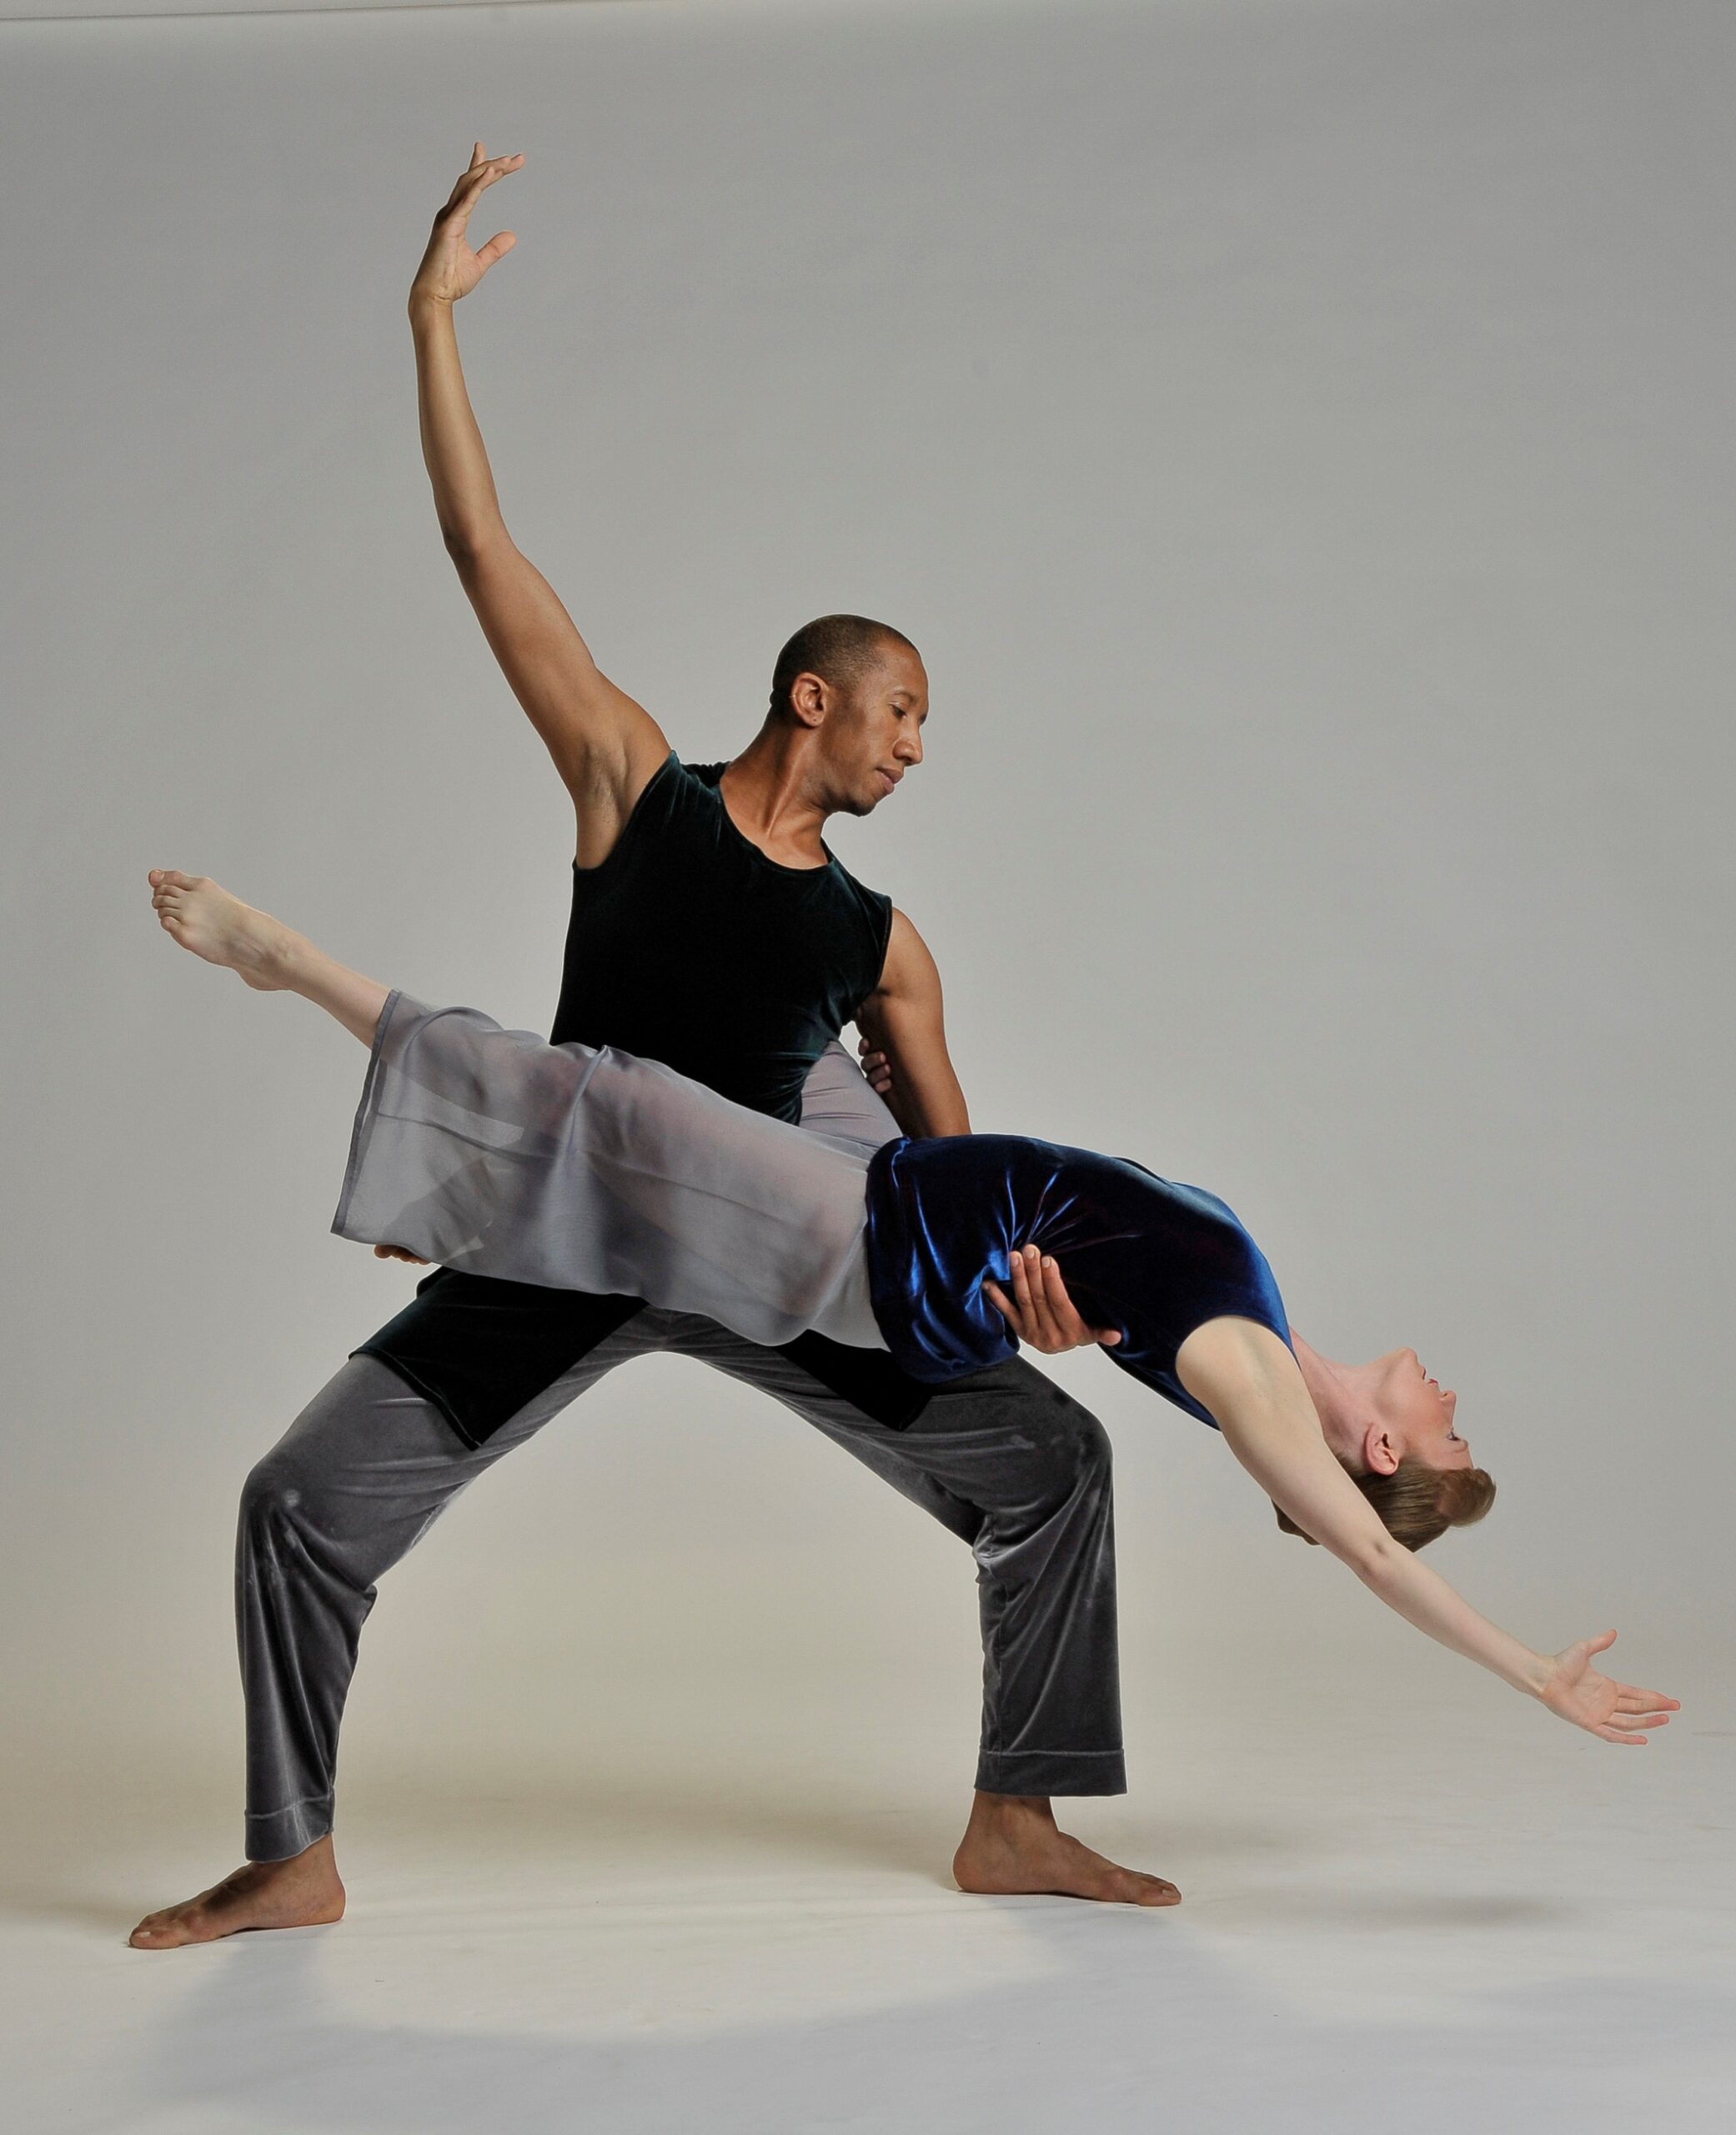 Duet Yoga Poses ll Duet Yoga Performance by Danish and Anumeet ll Partner  Yoga - YouTube